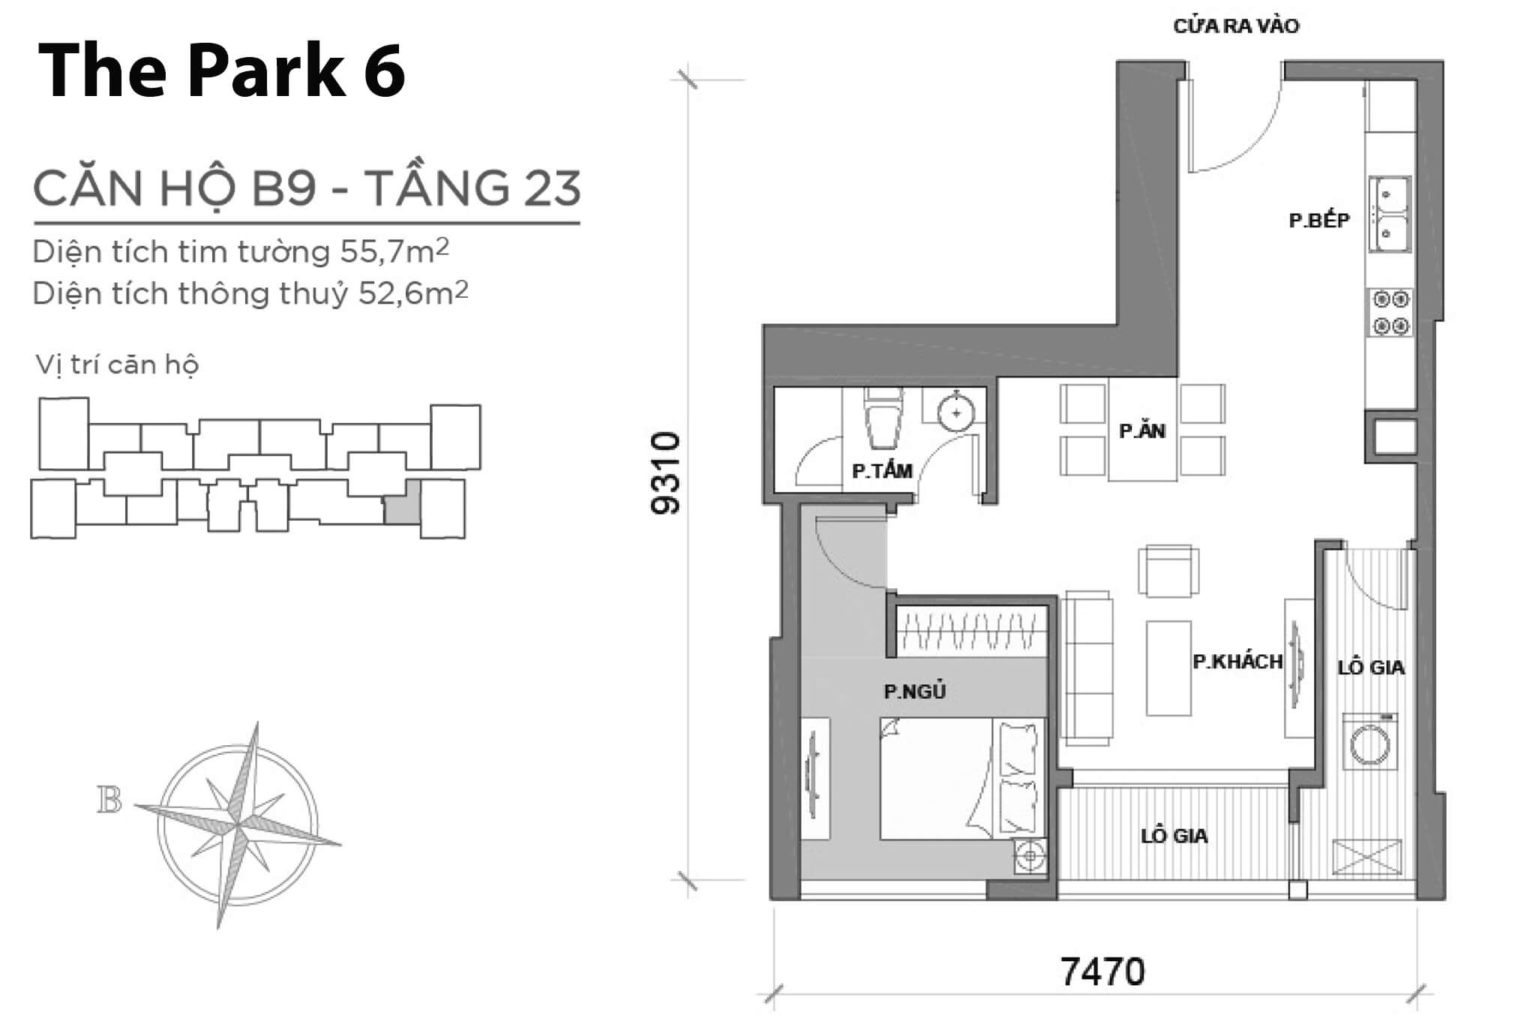 202301/02/10/065445-mat-bang-layout-park-6b-p6b-23-09-1536x1025.jpg